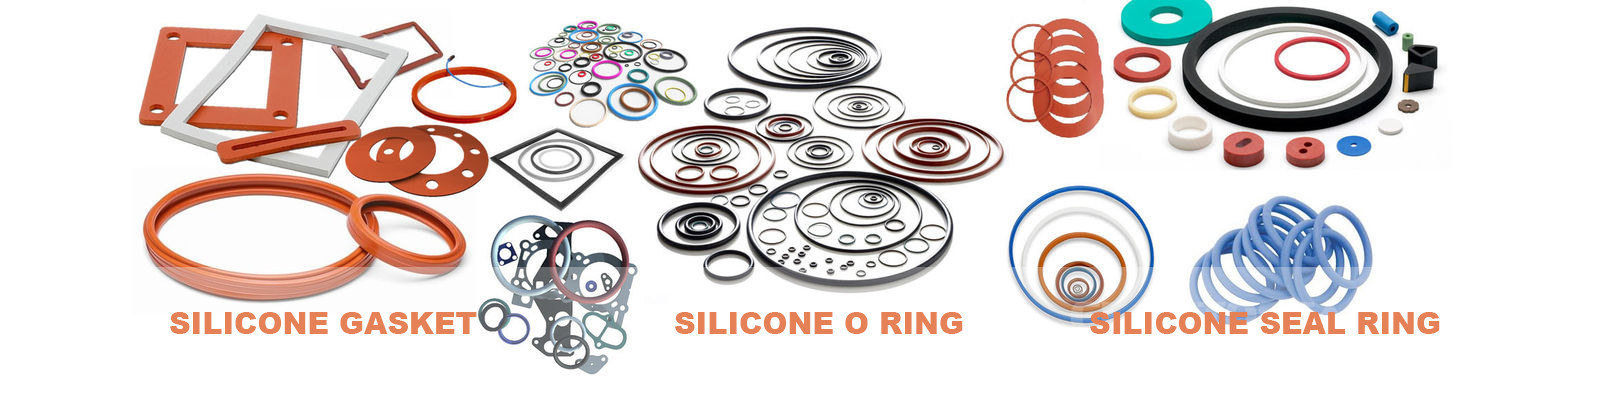 Silicone O Ring